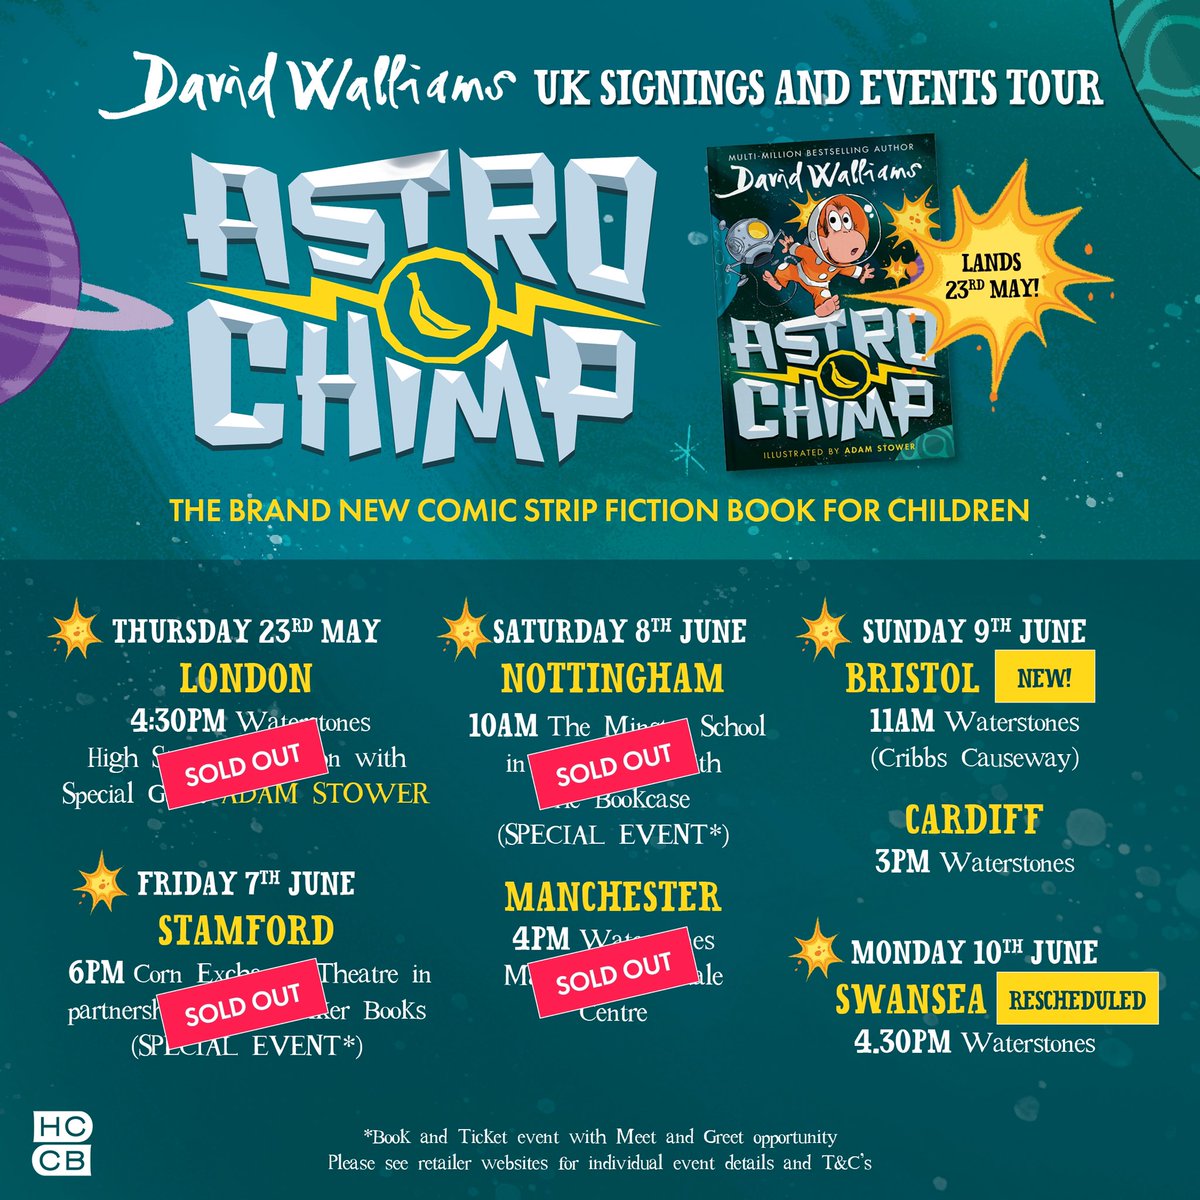 You can meet David on the ASTROCHIMP signing tour, now coming to BRISTOL! worldofdavidwalliams.com/astrochimp-tou…